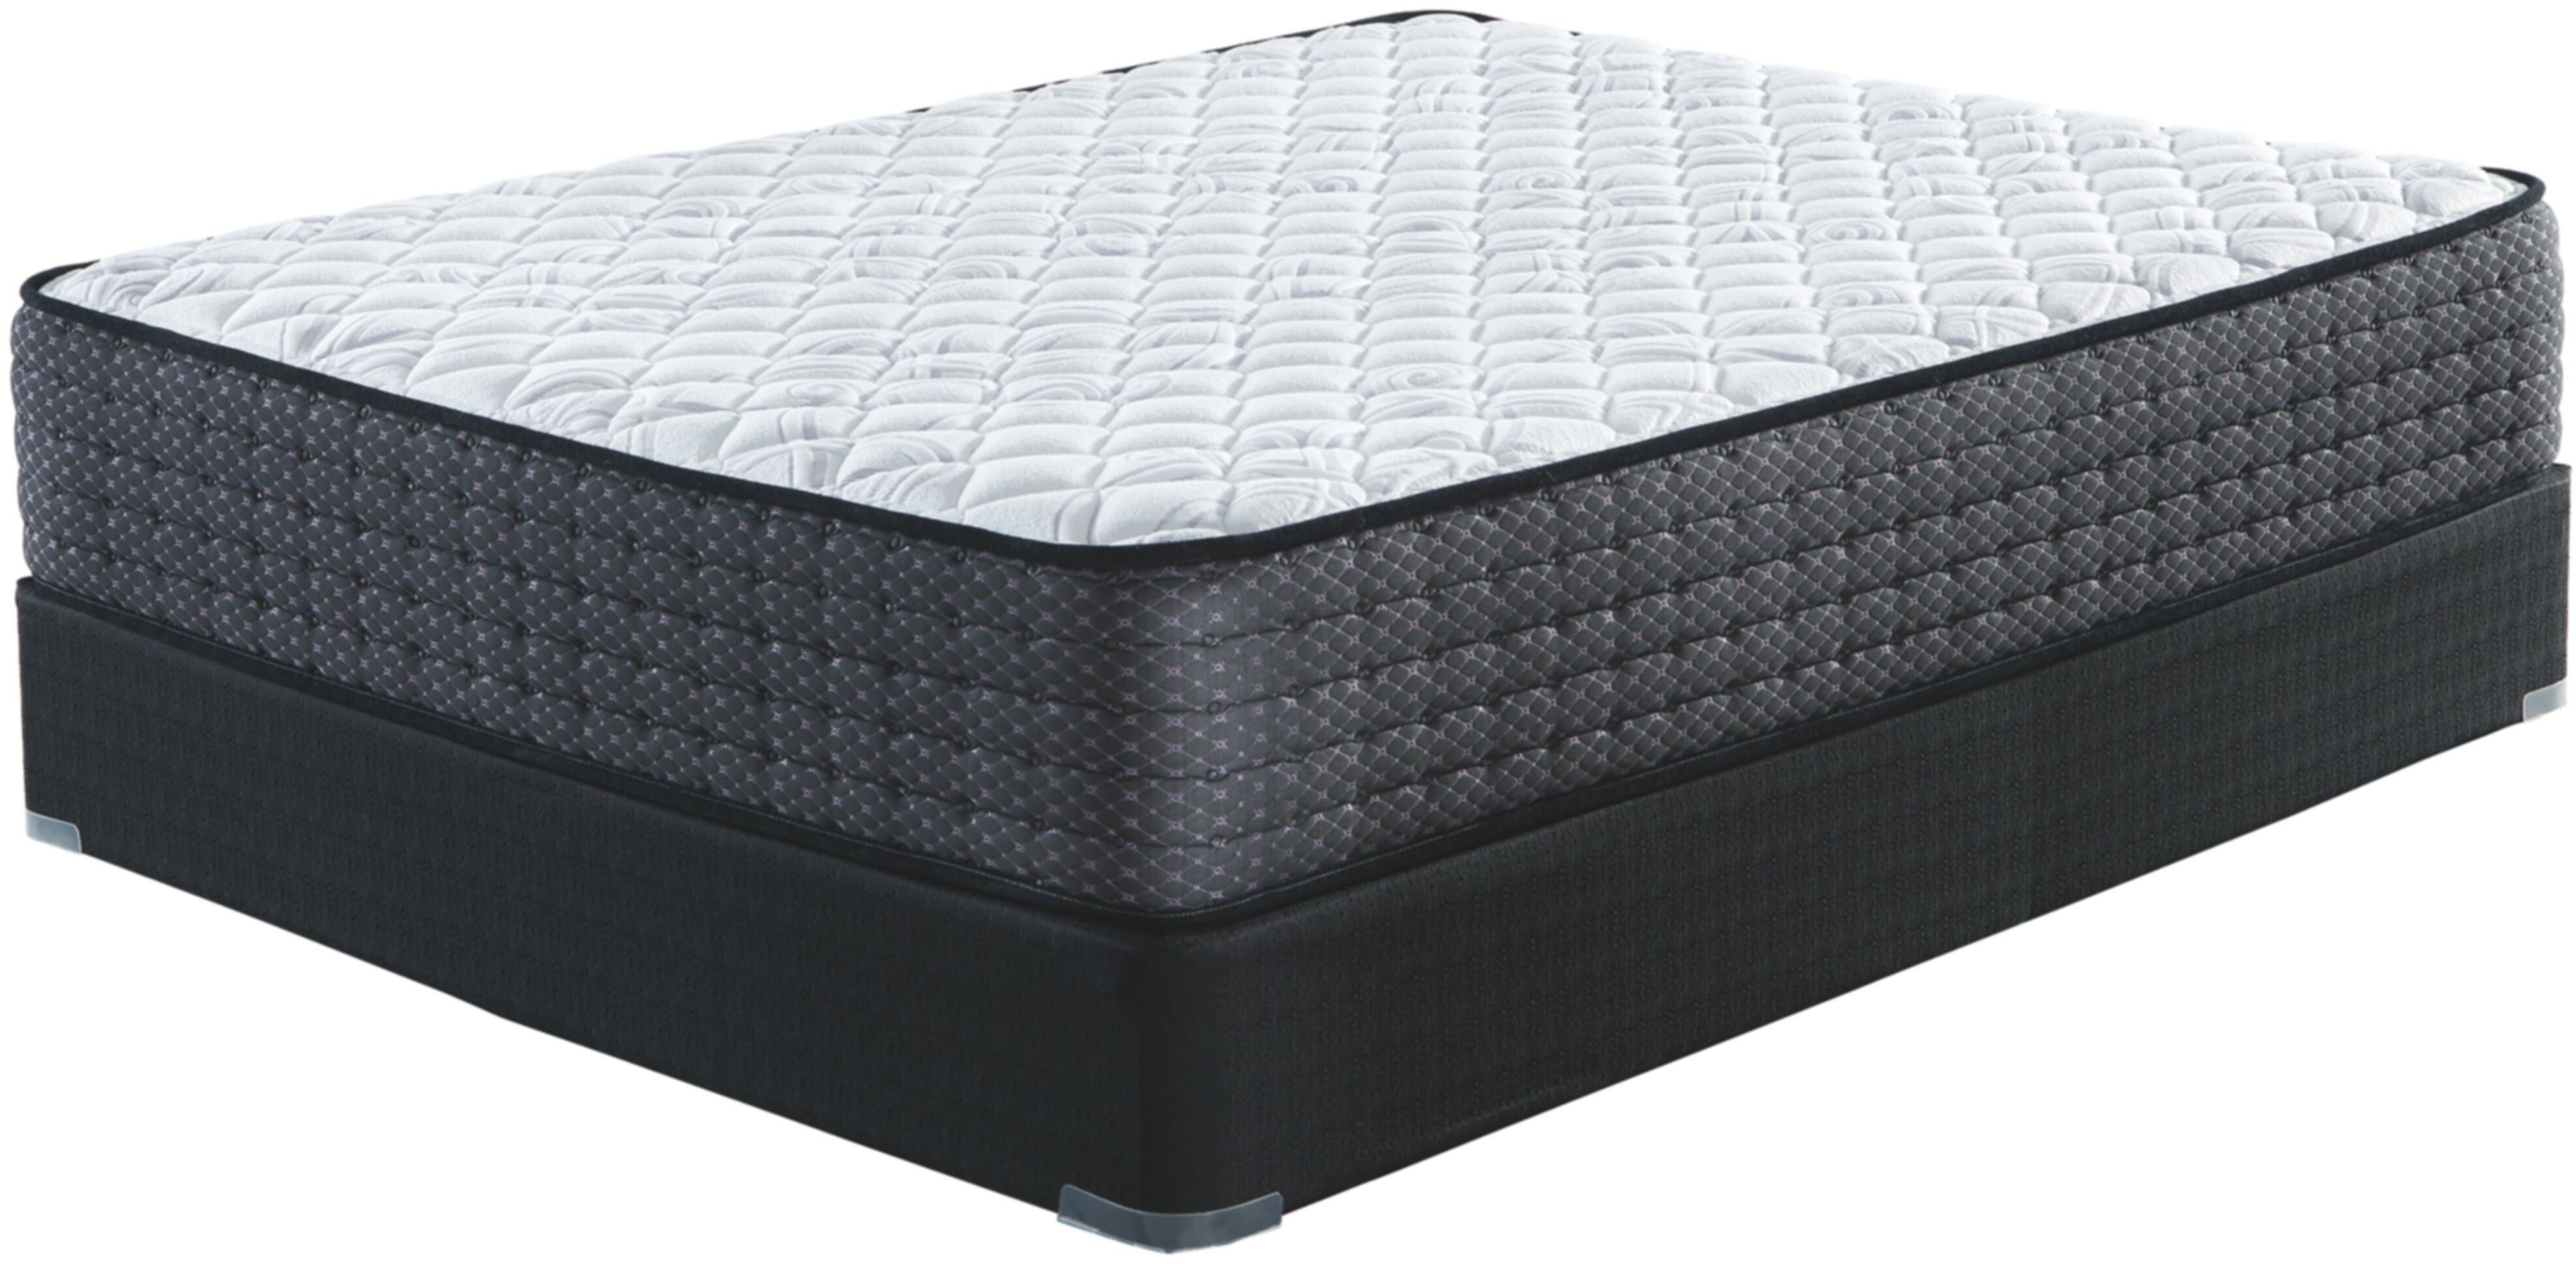 raleigh limited edition mattress reviews